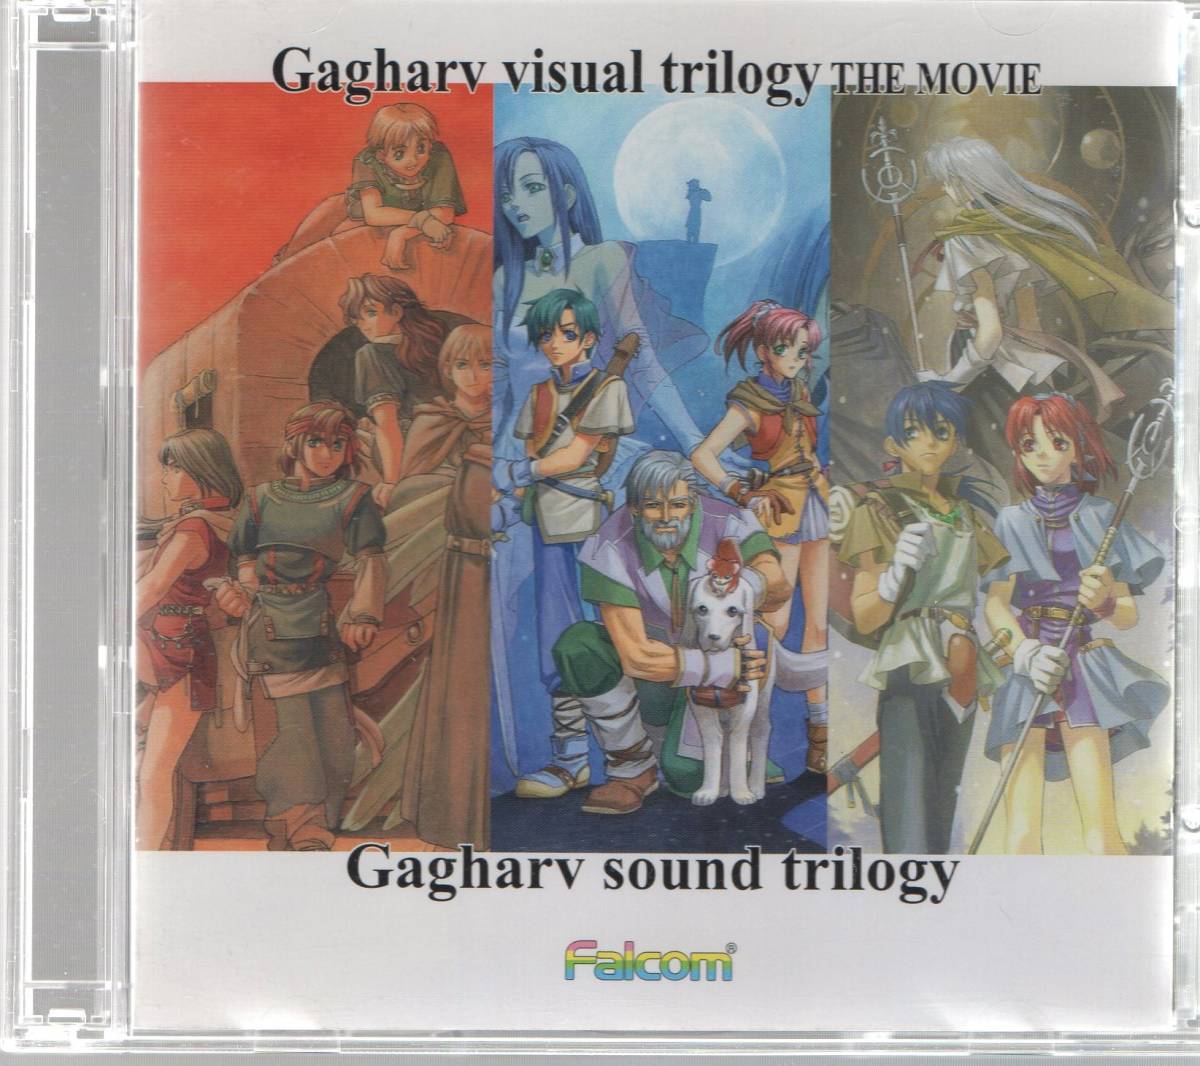 CD+CD-ROM 2枚組 英雄伝説5 海の檻歌 ガガーブビジュアルトリロジー CD-ROM / ガガーブ サウンドトリロジー CD_画像1